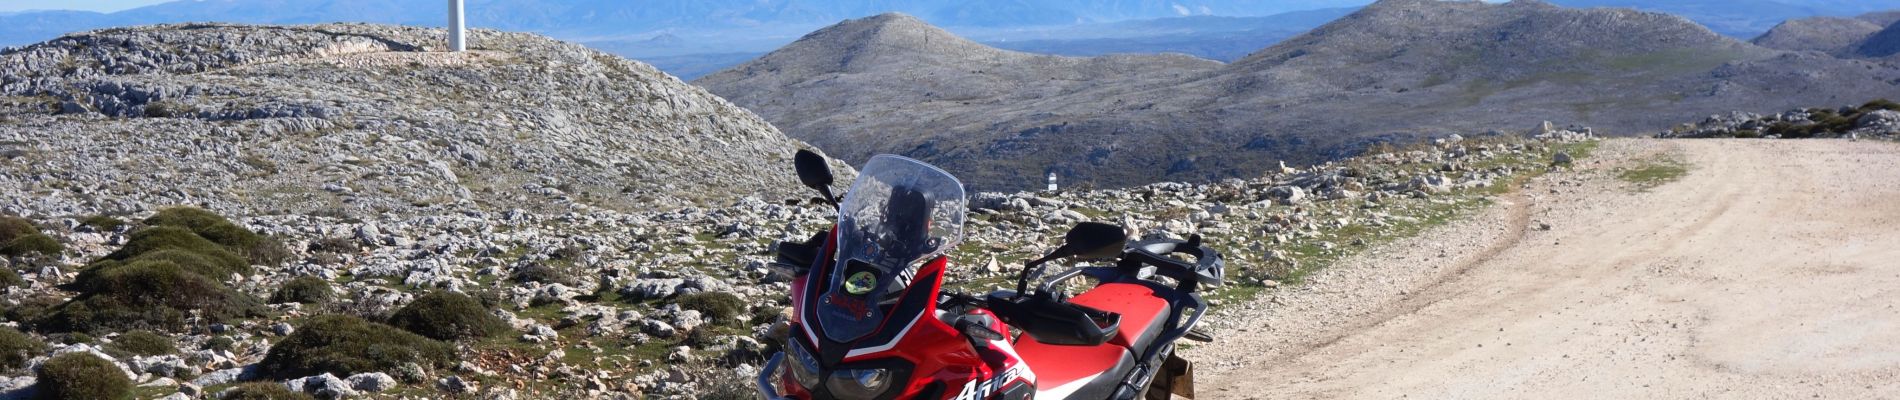 Randonnée Moto-cross Almuñécar - Loja Alhama ruta de Cabras - Photo